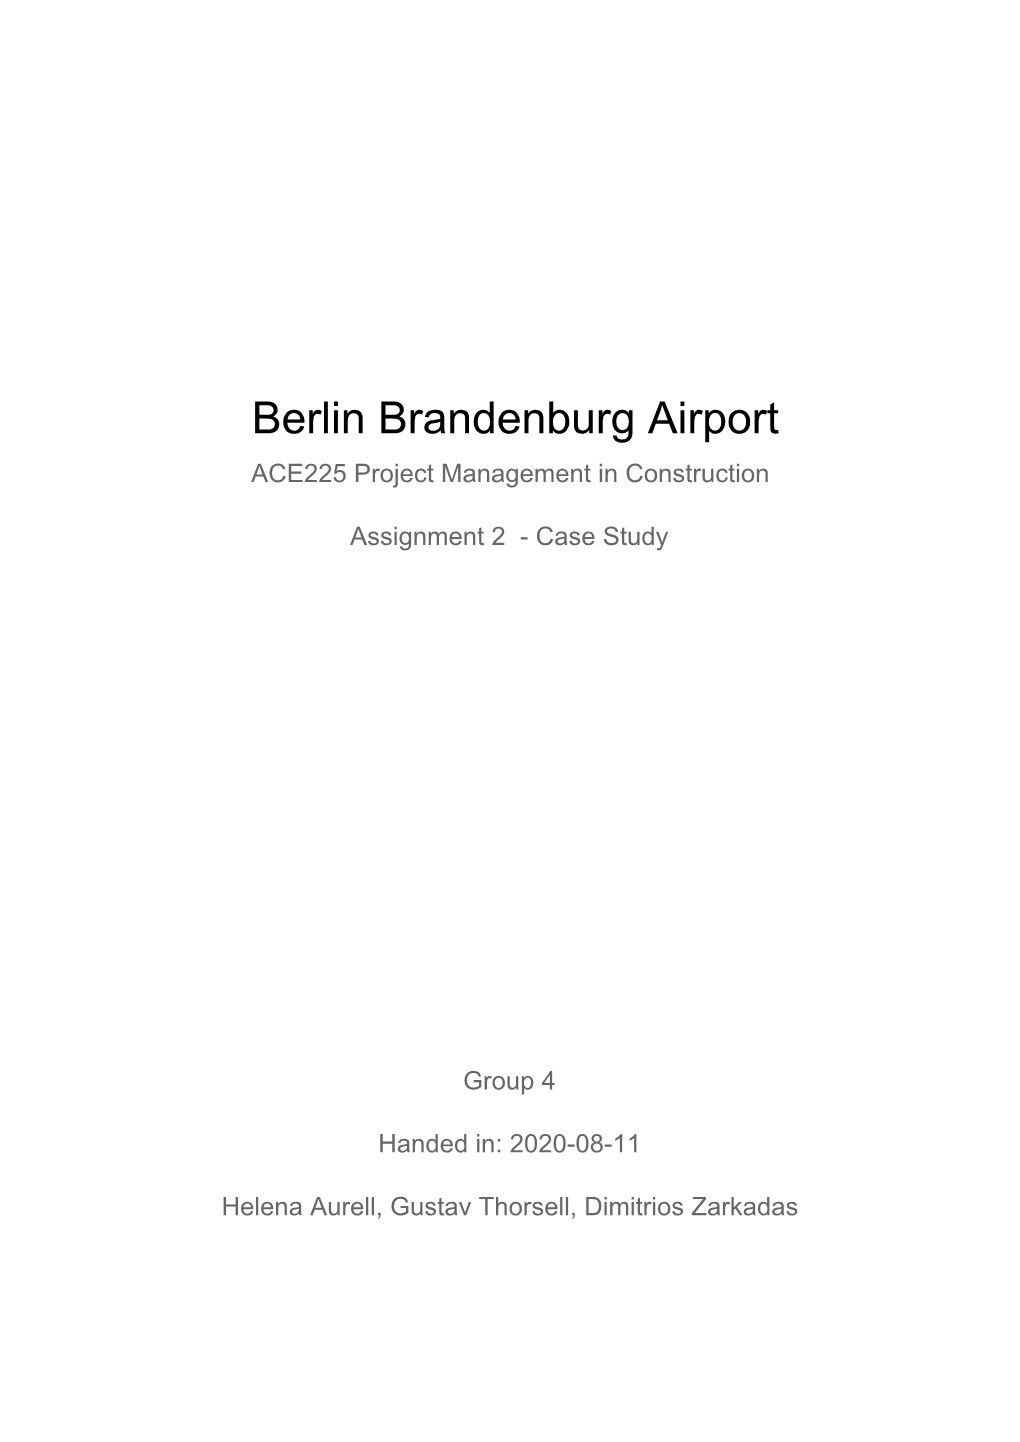 Berlin Brandenburg Airport ACE225 Project Management in Construction